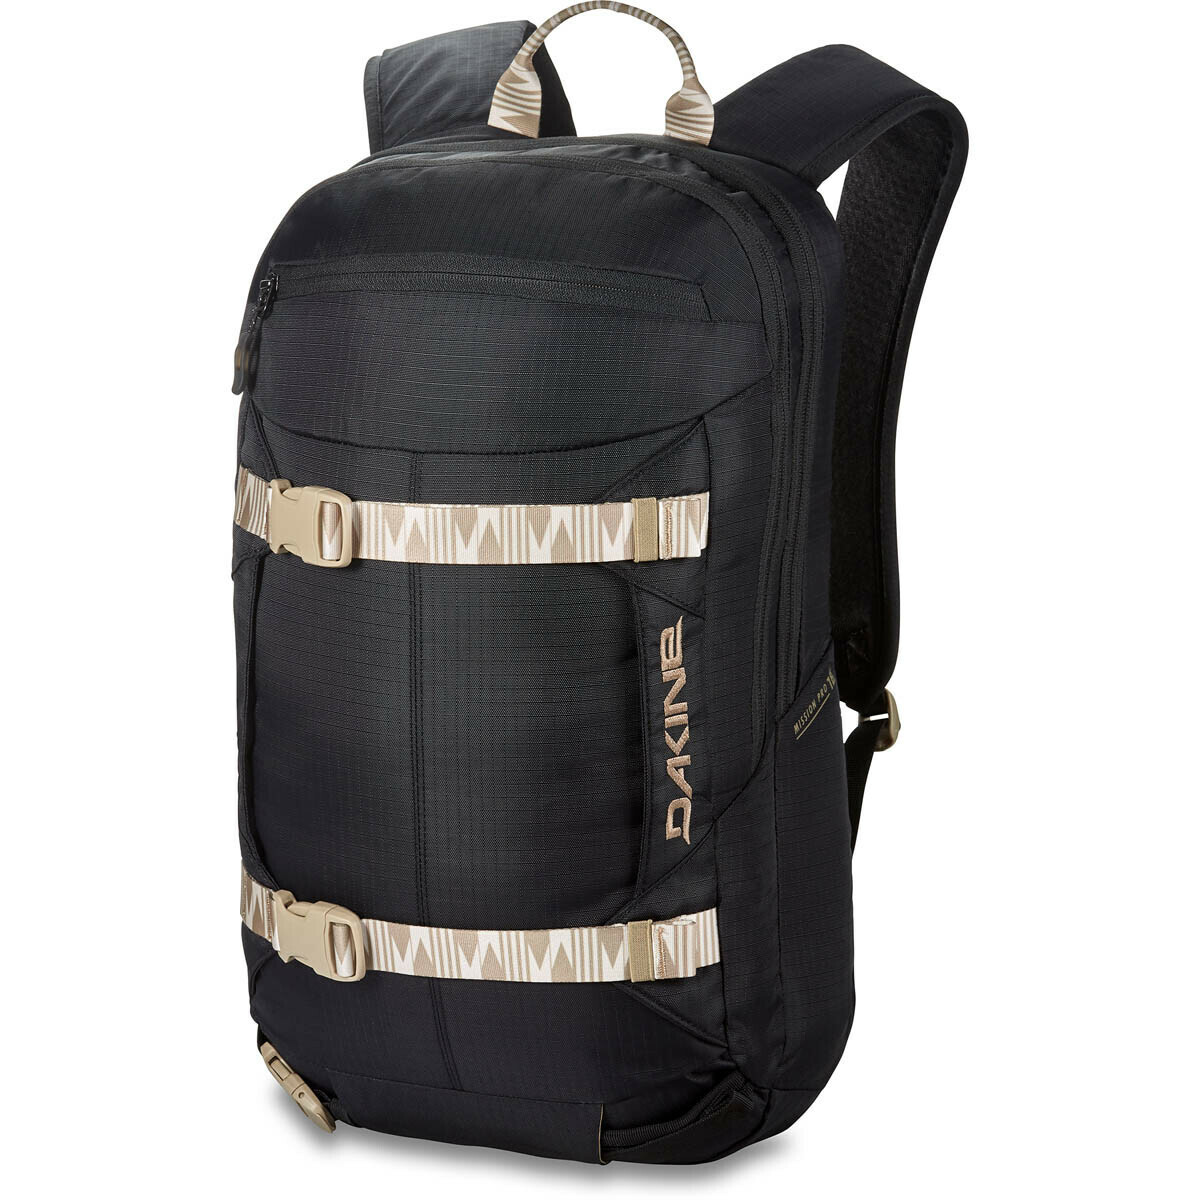 Mission Pro 18L Backpack - Women's